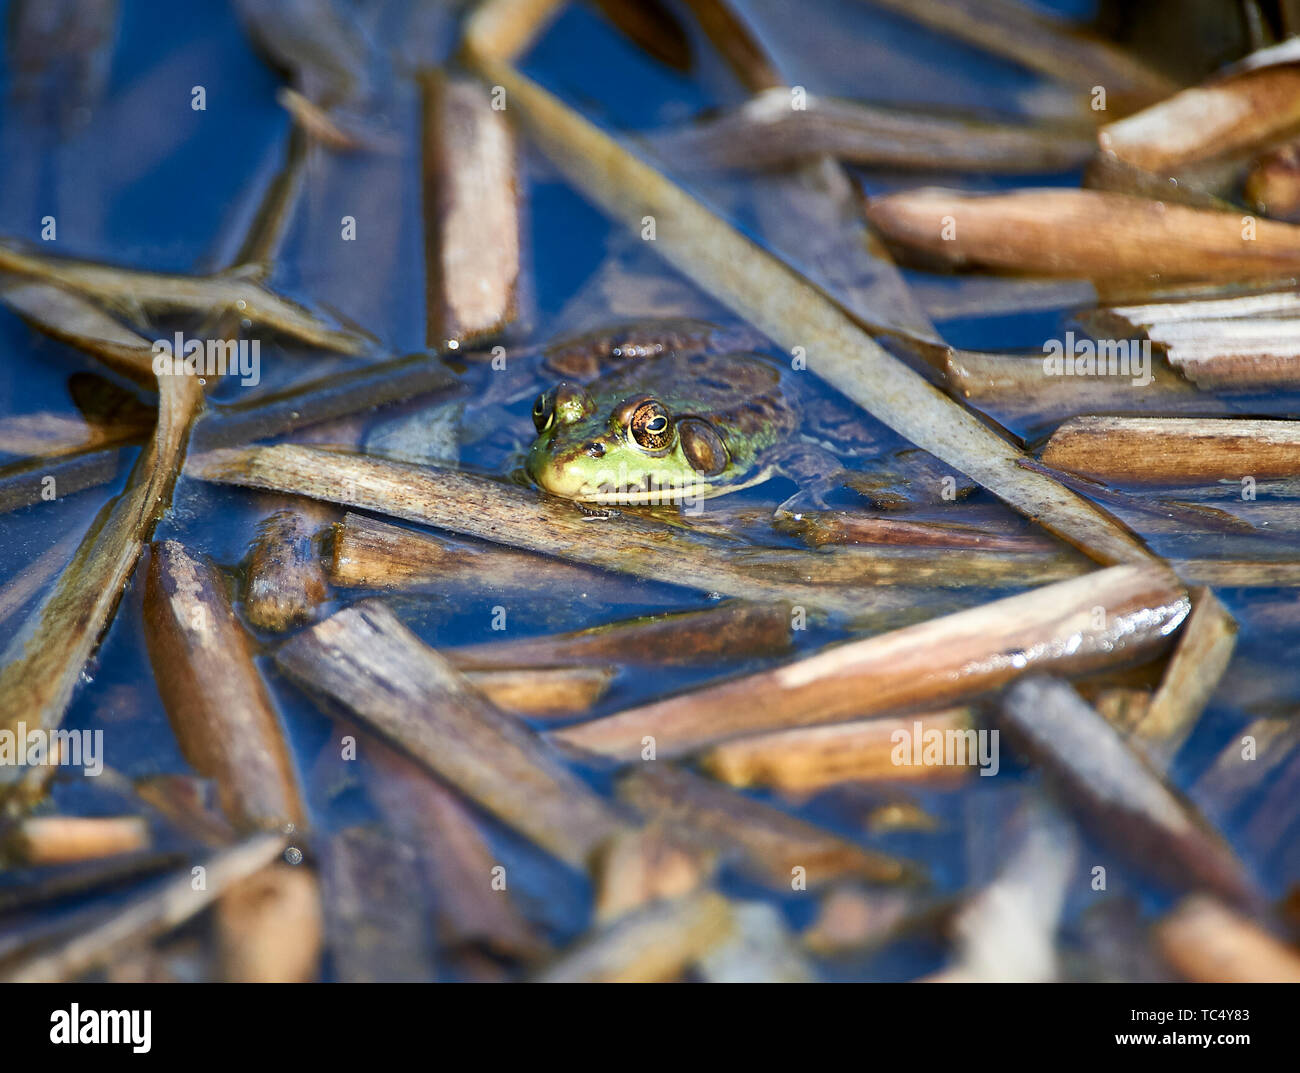 Green frog (Rana clamitans) in a pond, Upper Clements, Annapolis Royal, Nova Scotia, Canada, Stock Photo